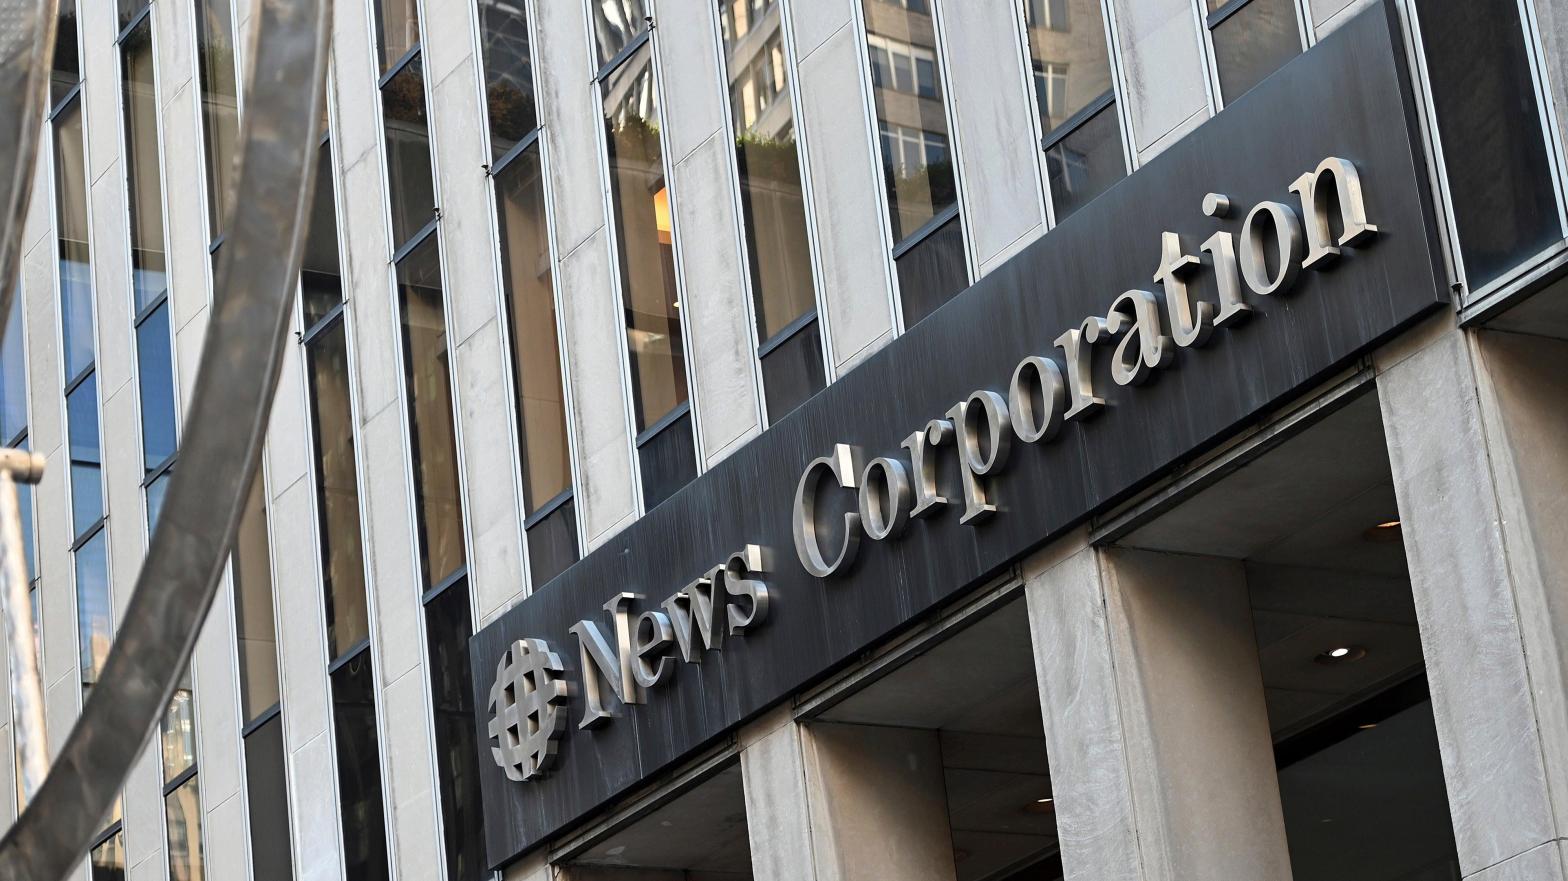 The News Corp headquarters in New York City. (Photo: Anthony Behar/Sipa USA, AP)